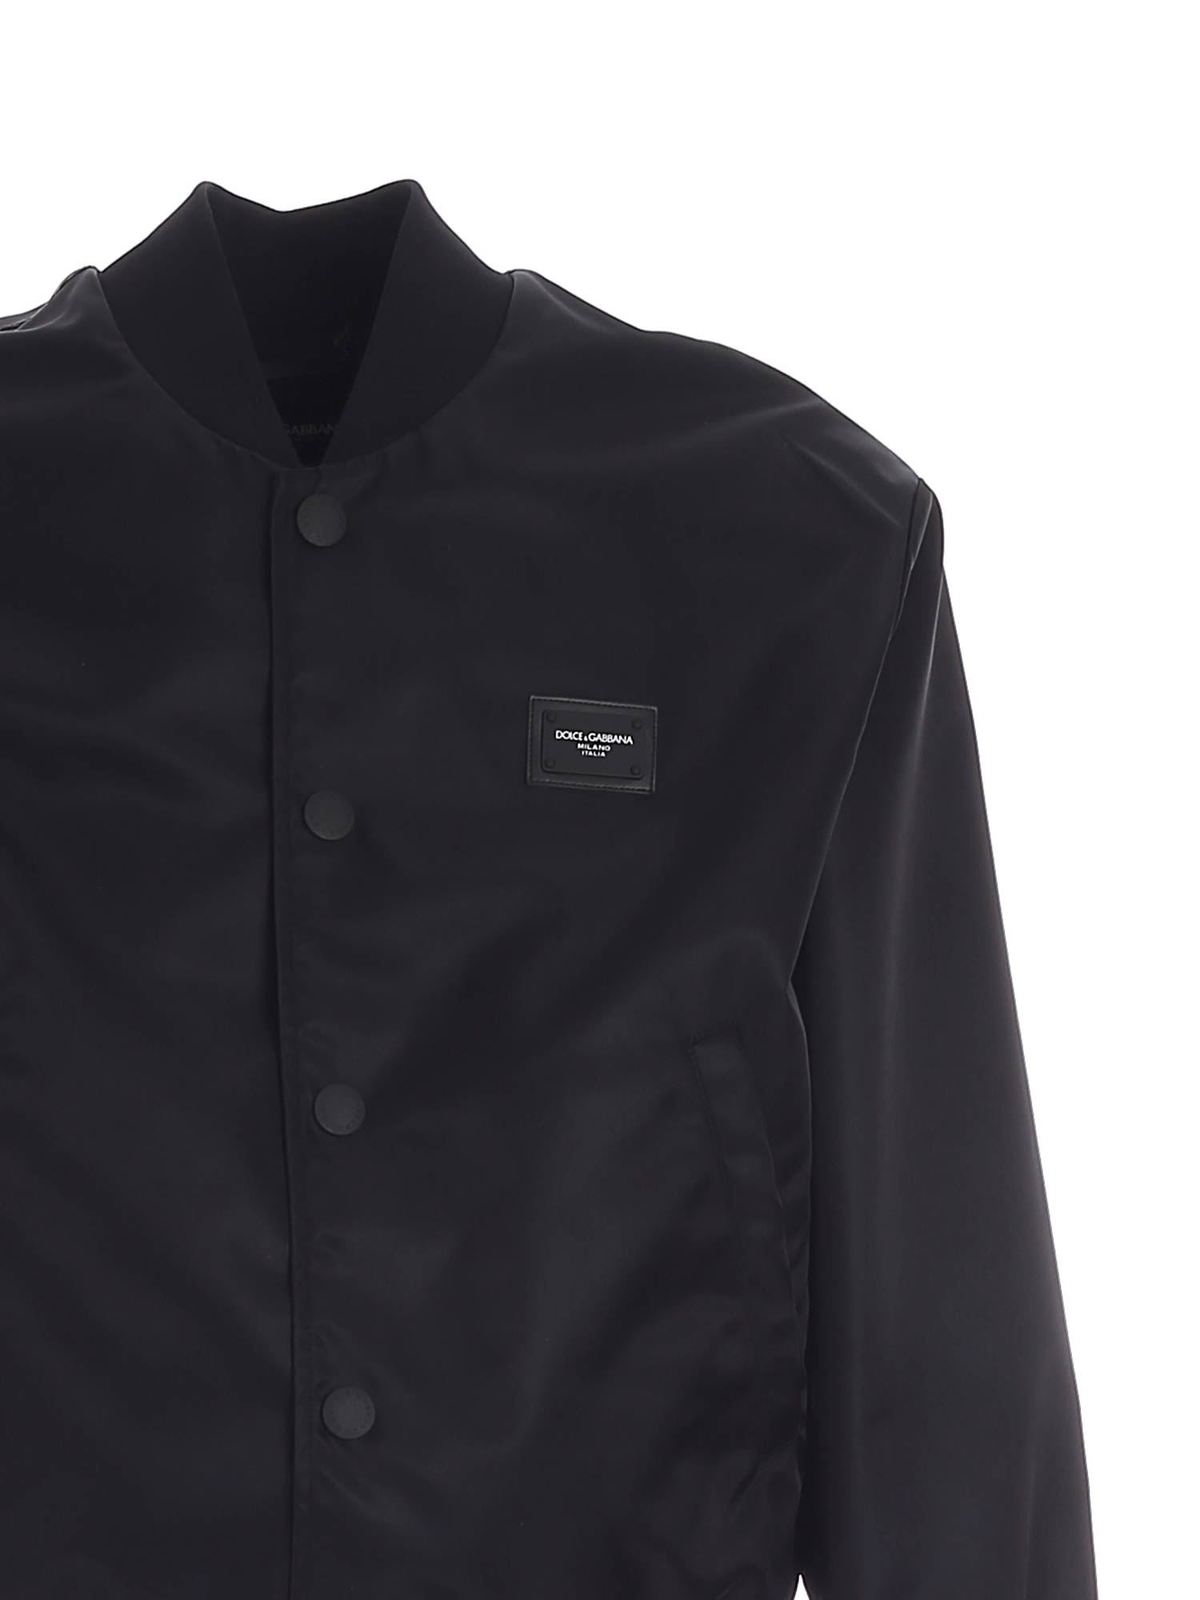 Bombers Dolce & Gabbana - Logo plaque bomber jacket in black ...